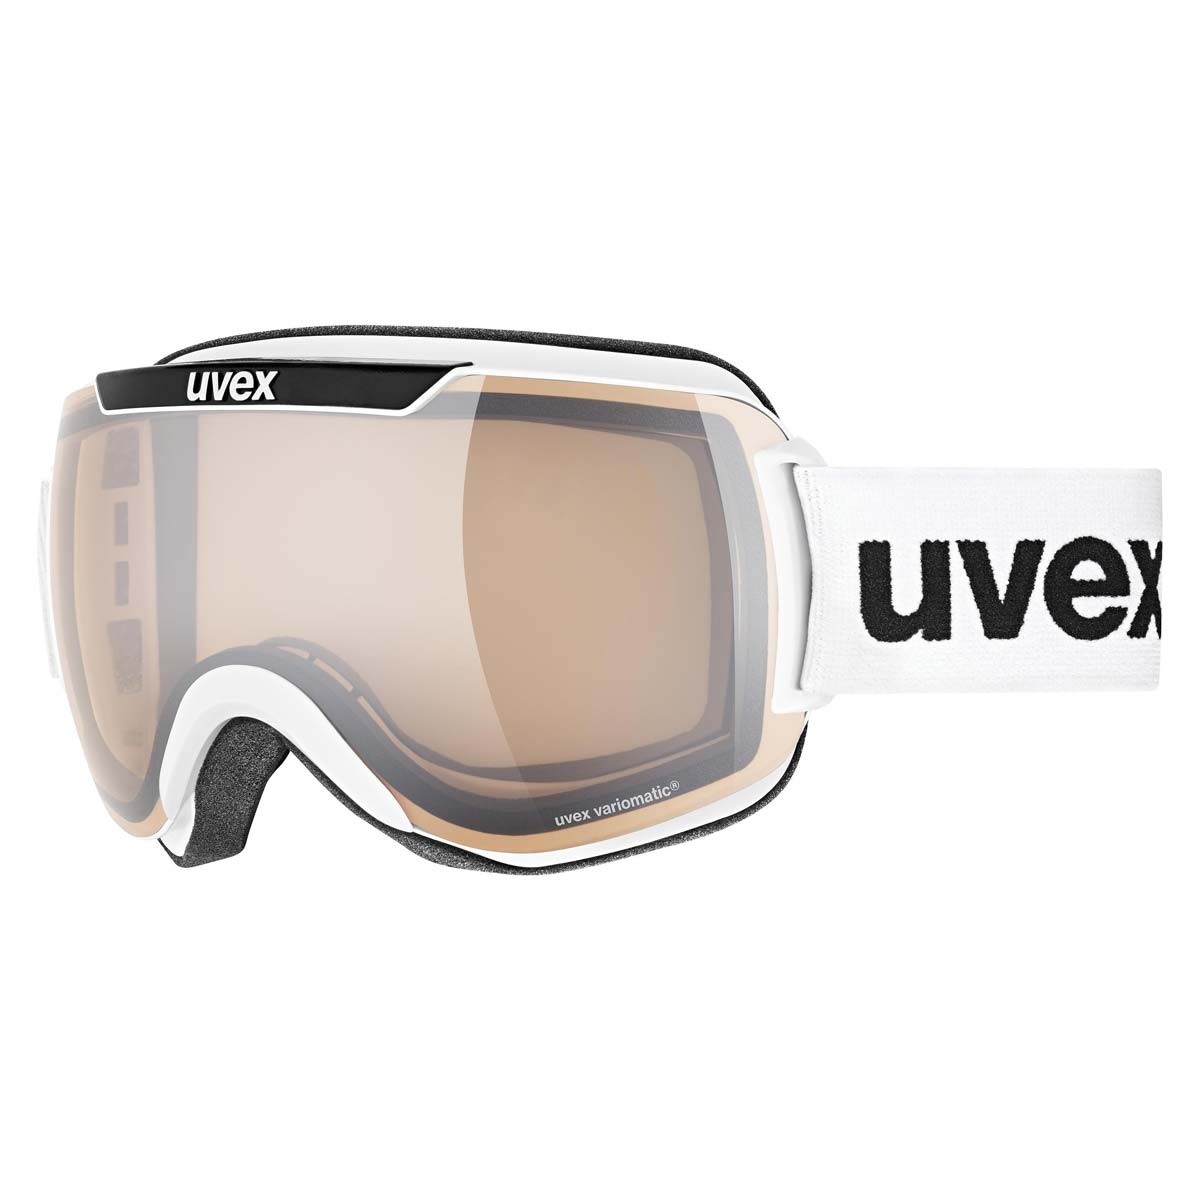 Adulto Uvex Downhill 2000 Cv maschera da sci Unisex Pacco da 1